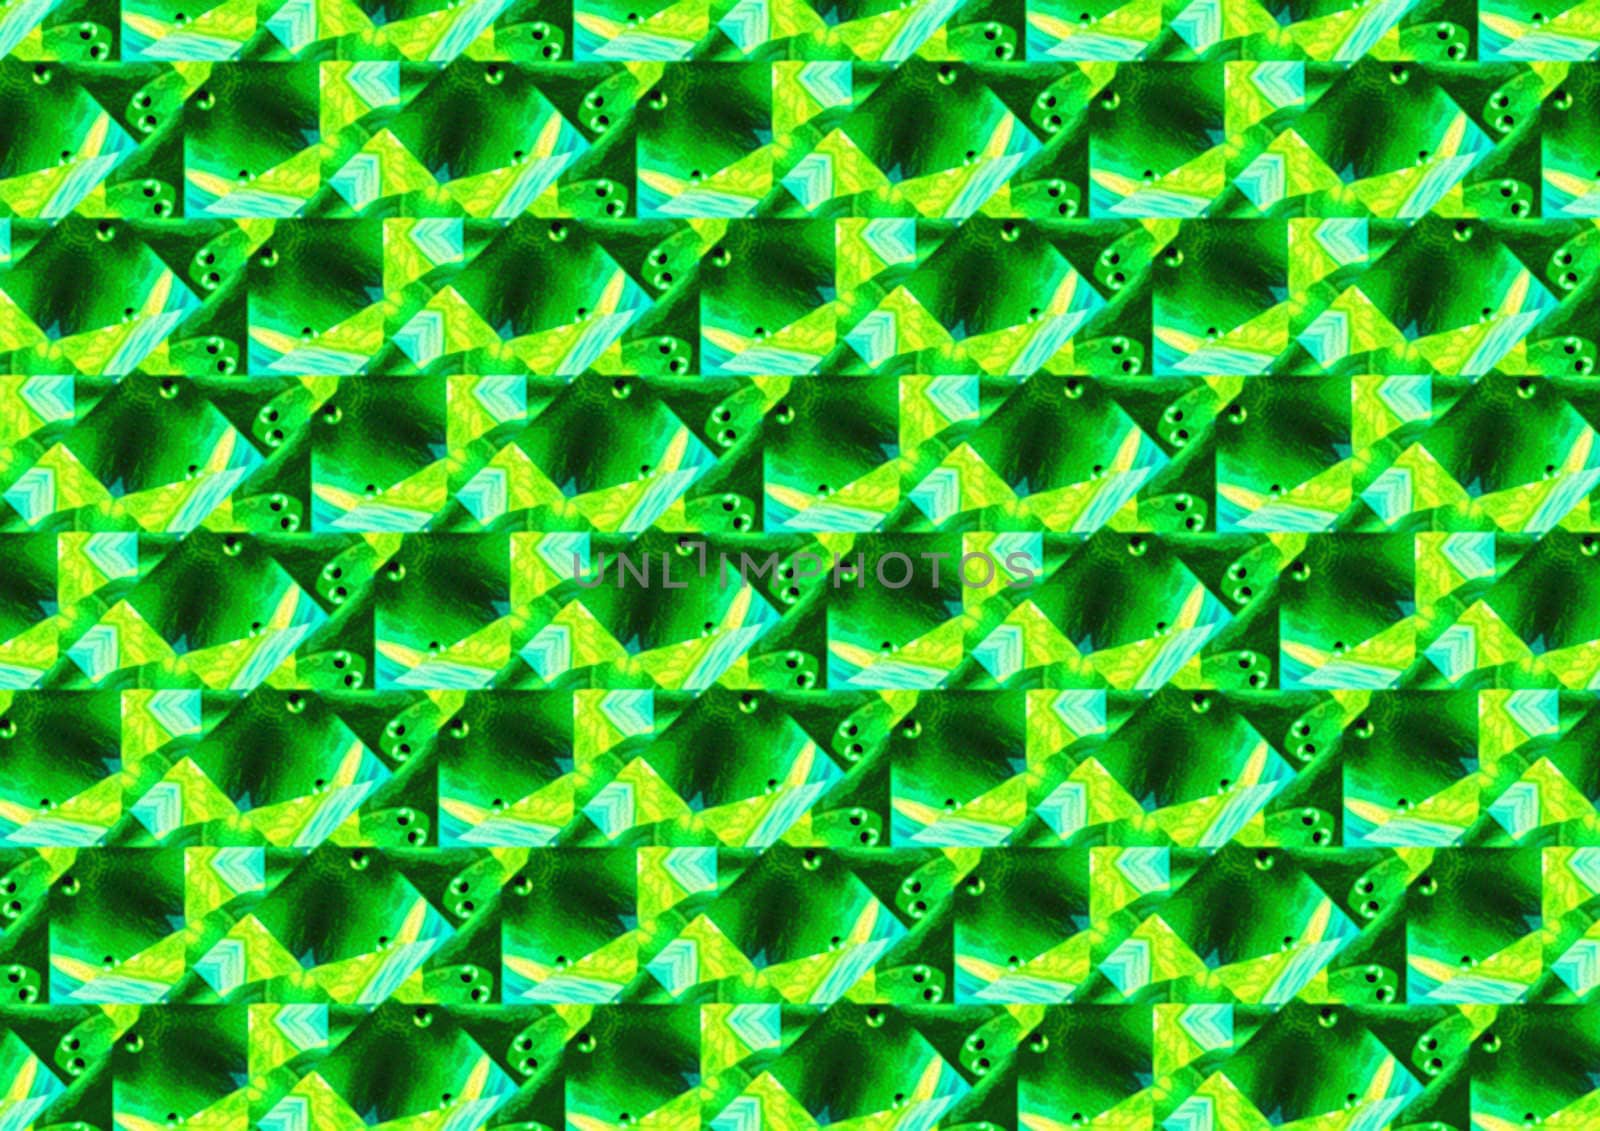 creative textured abstract symbolic fantasy image associative pattern